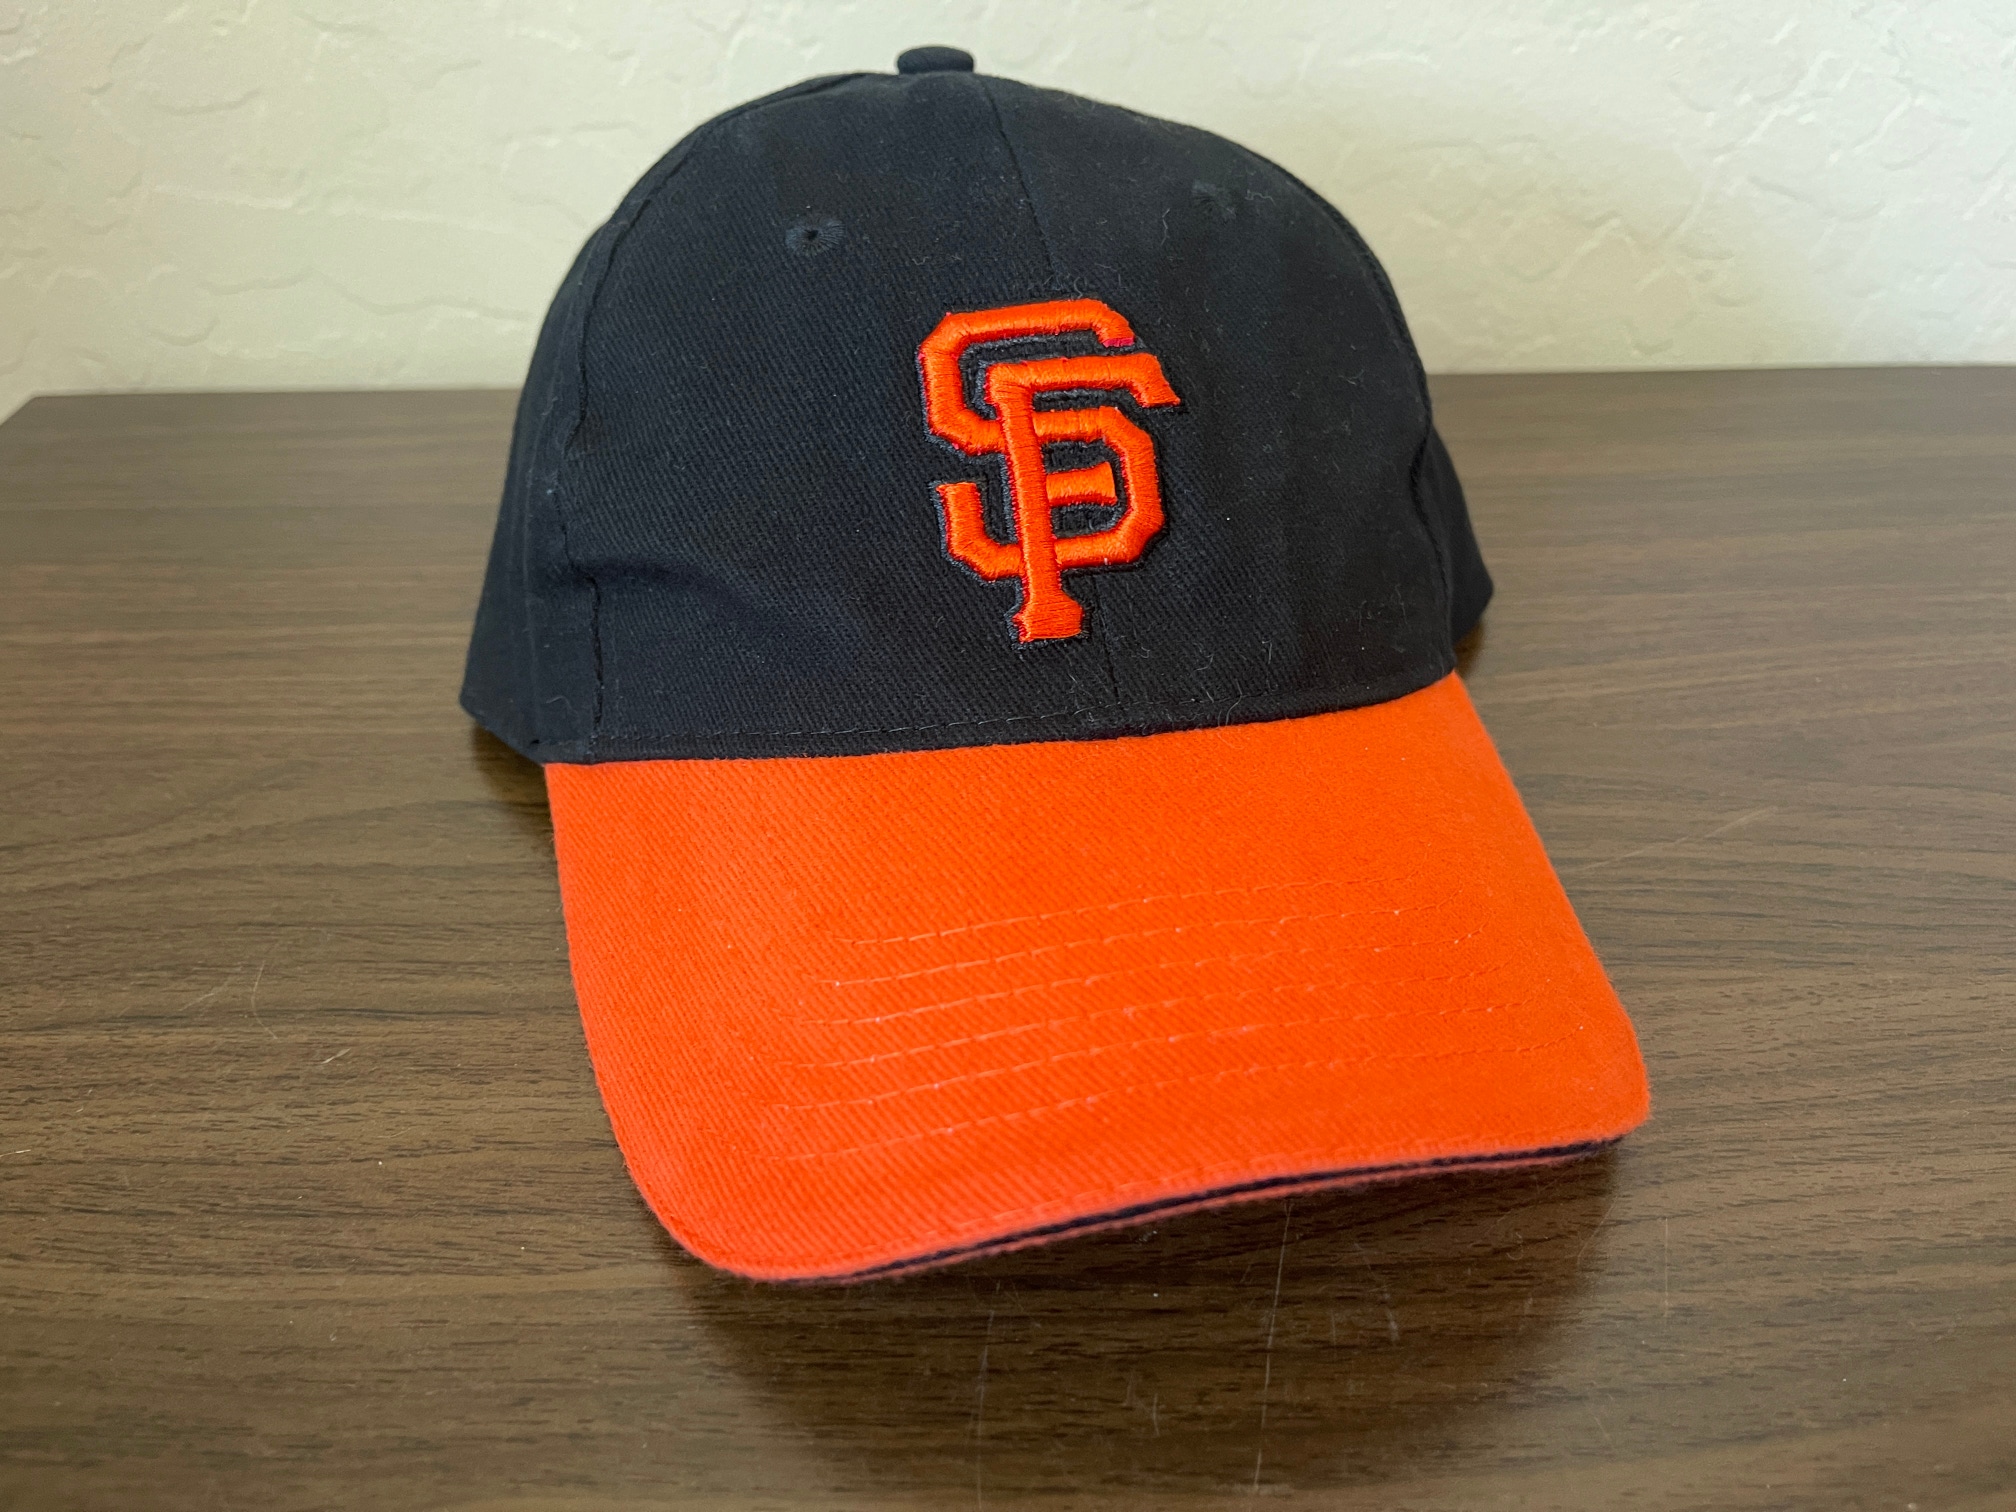 San Francisco Giants MLB BASEBALL SUPER AWESOME Promo Adjustable Strap Cap Hat!